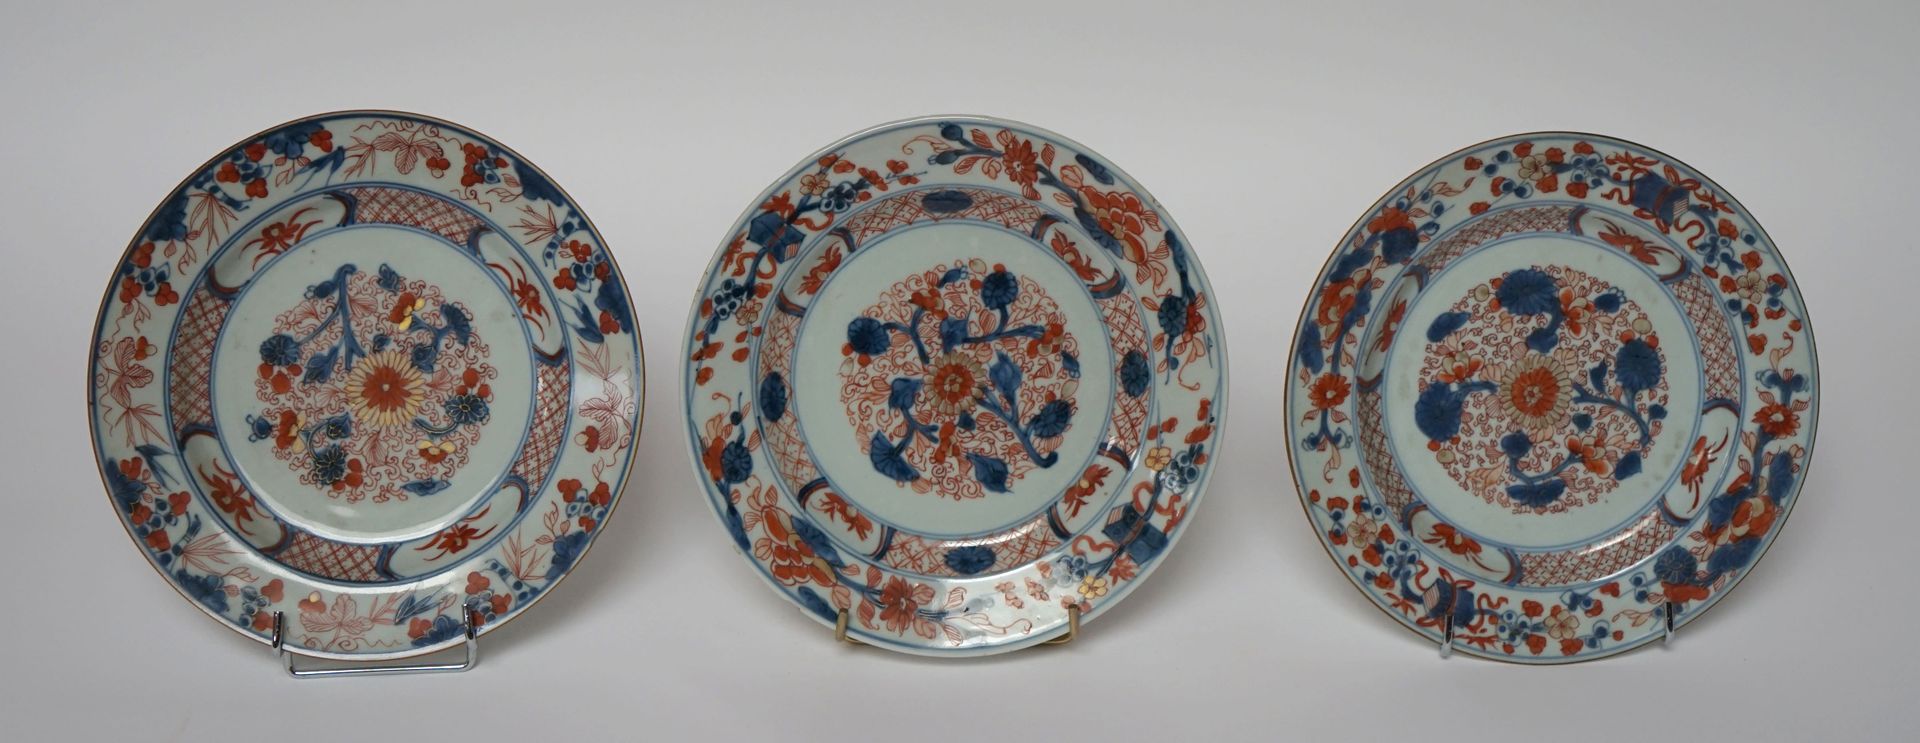 Null 中国，18-19世纪。三个日本风格的伊万里瓷盘，有蓝红色和金色的花卉装饰。(小碎片)。D. 22,5 cm